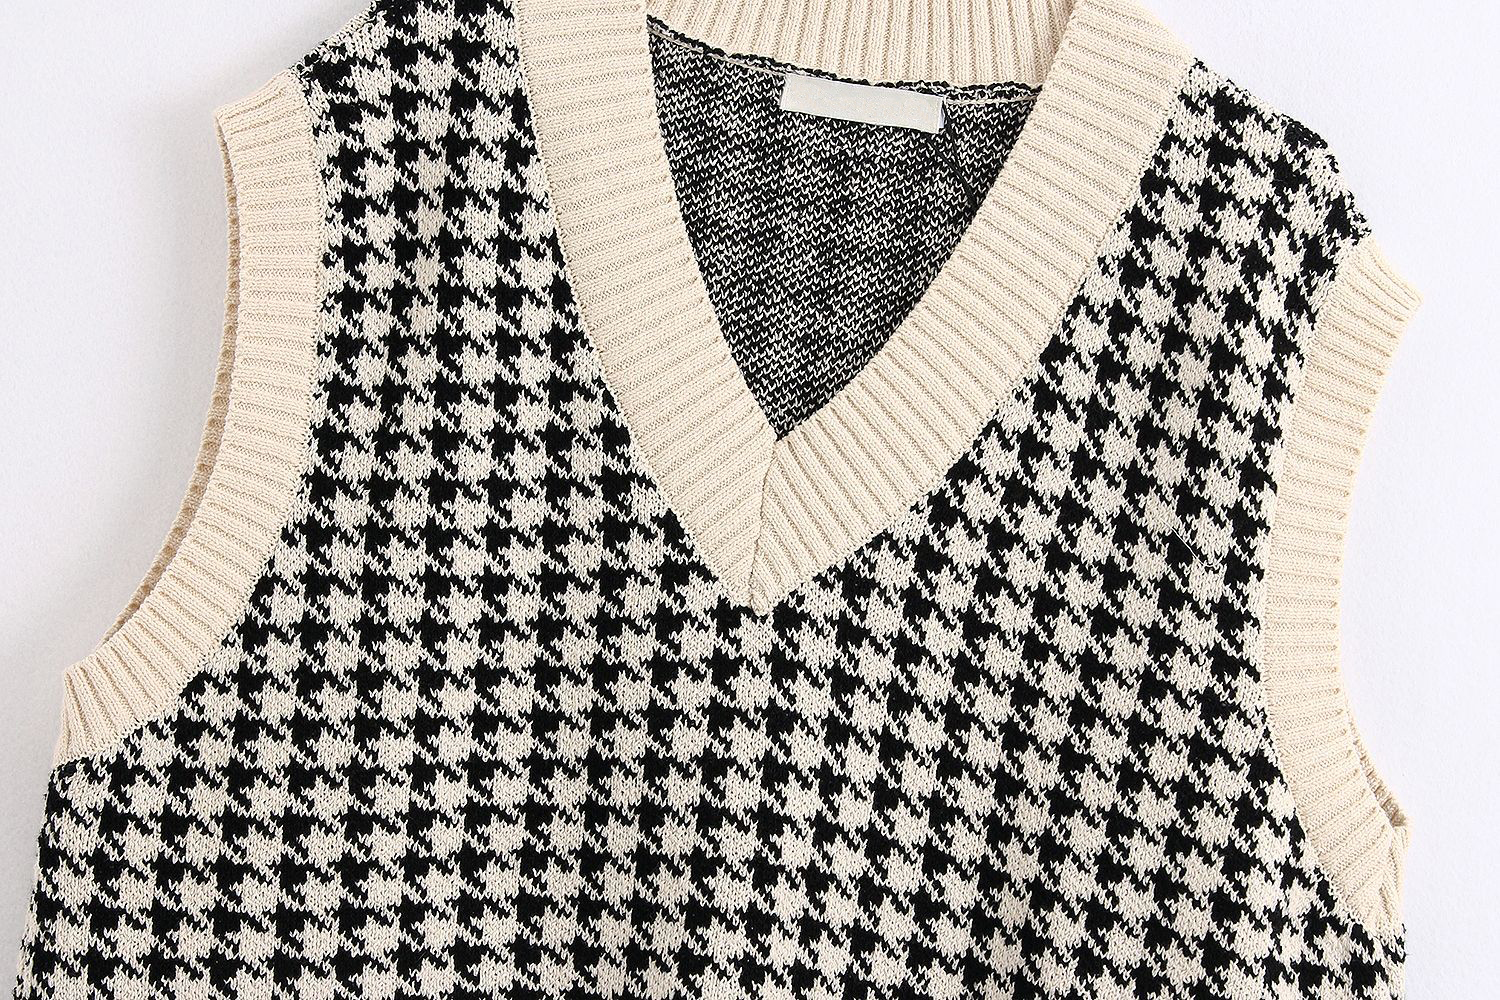 Vintage Sleeveless Plaid Knitted Sweater JKP4517